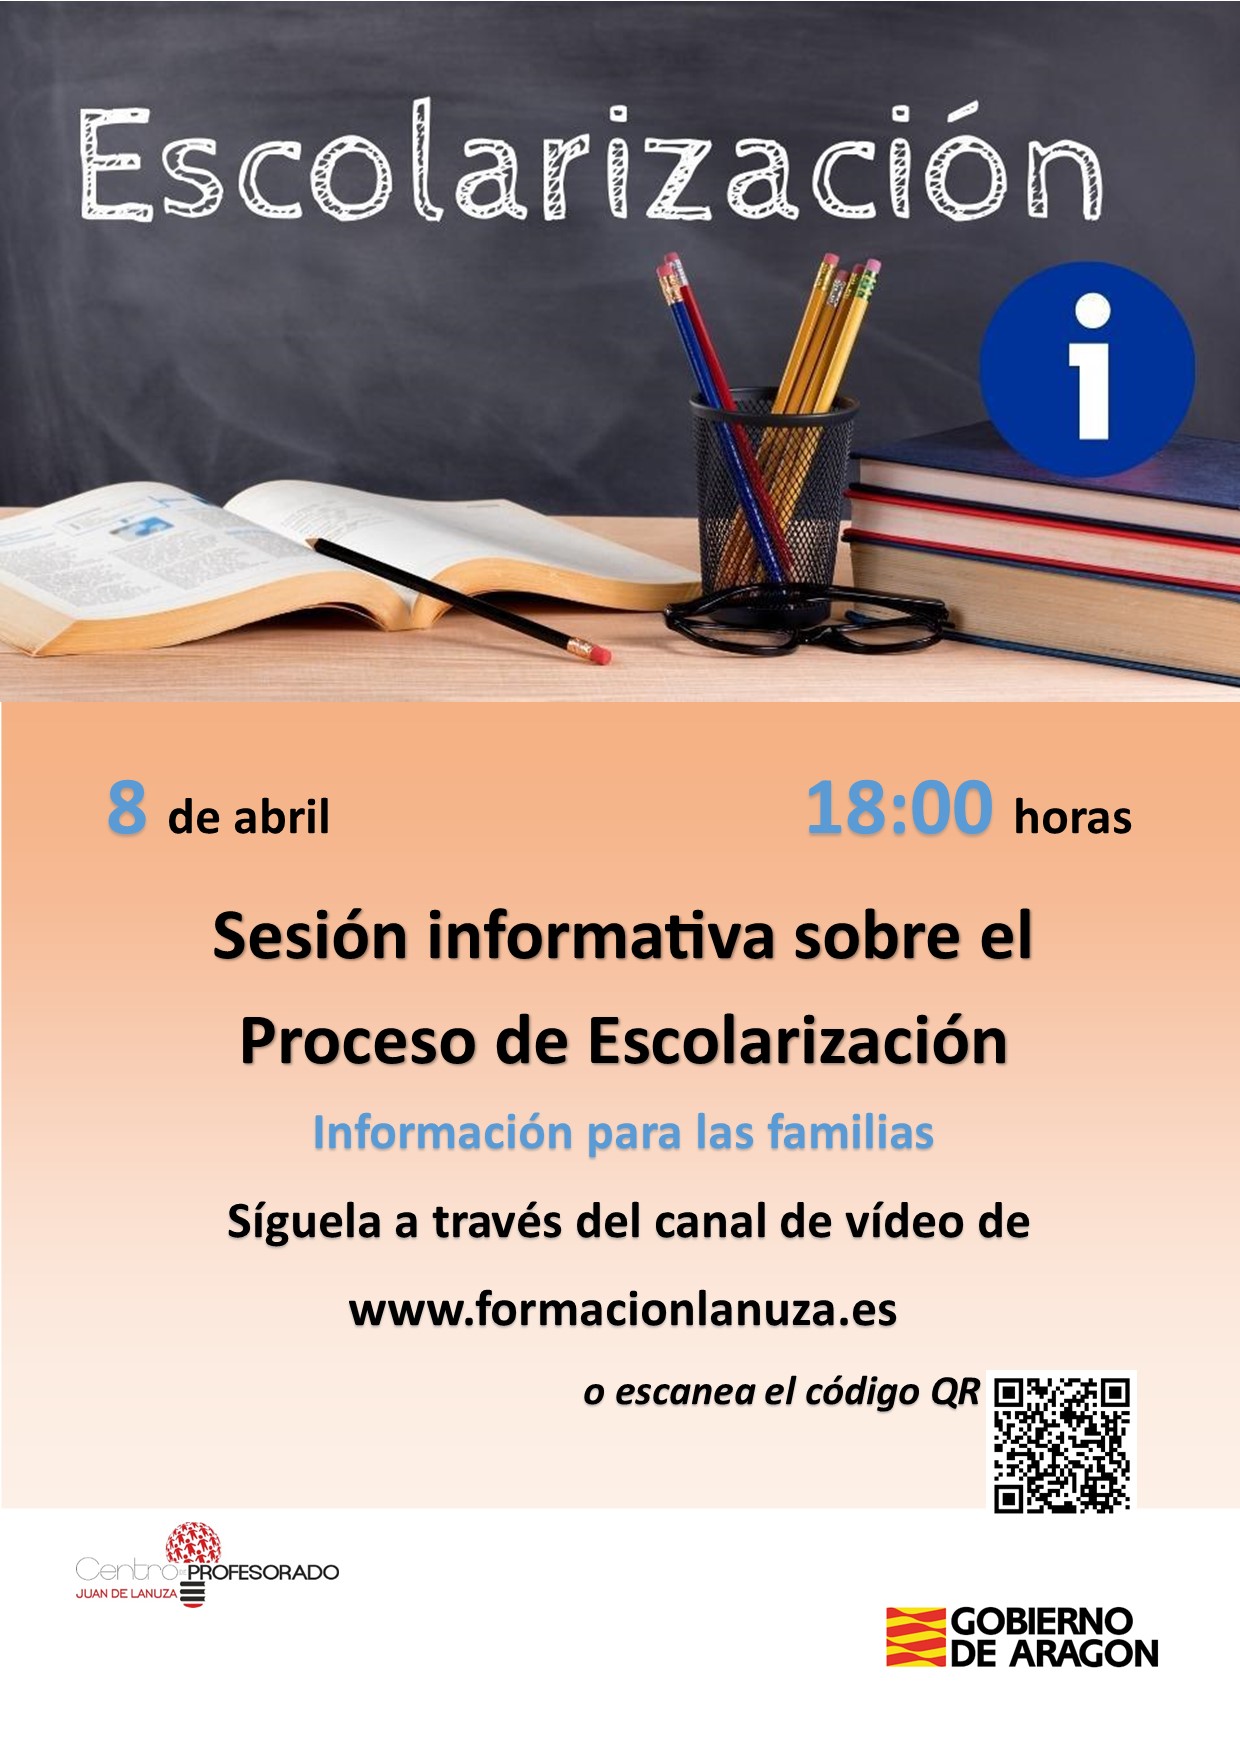 http://colegioeugeniolopezylopez.es/wp-content/uploads/2021/04/Escolarizacion-Familias.jpg